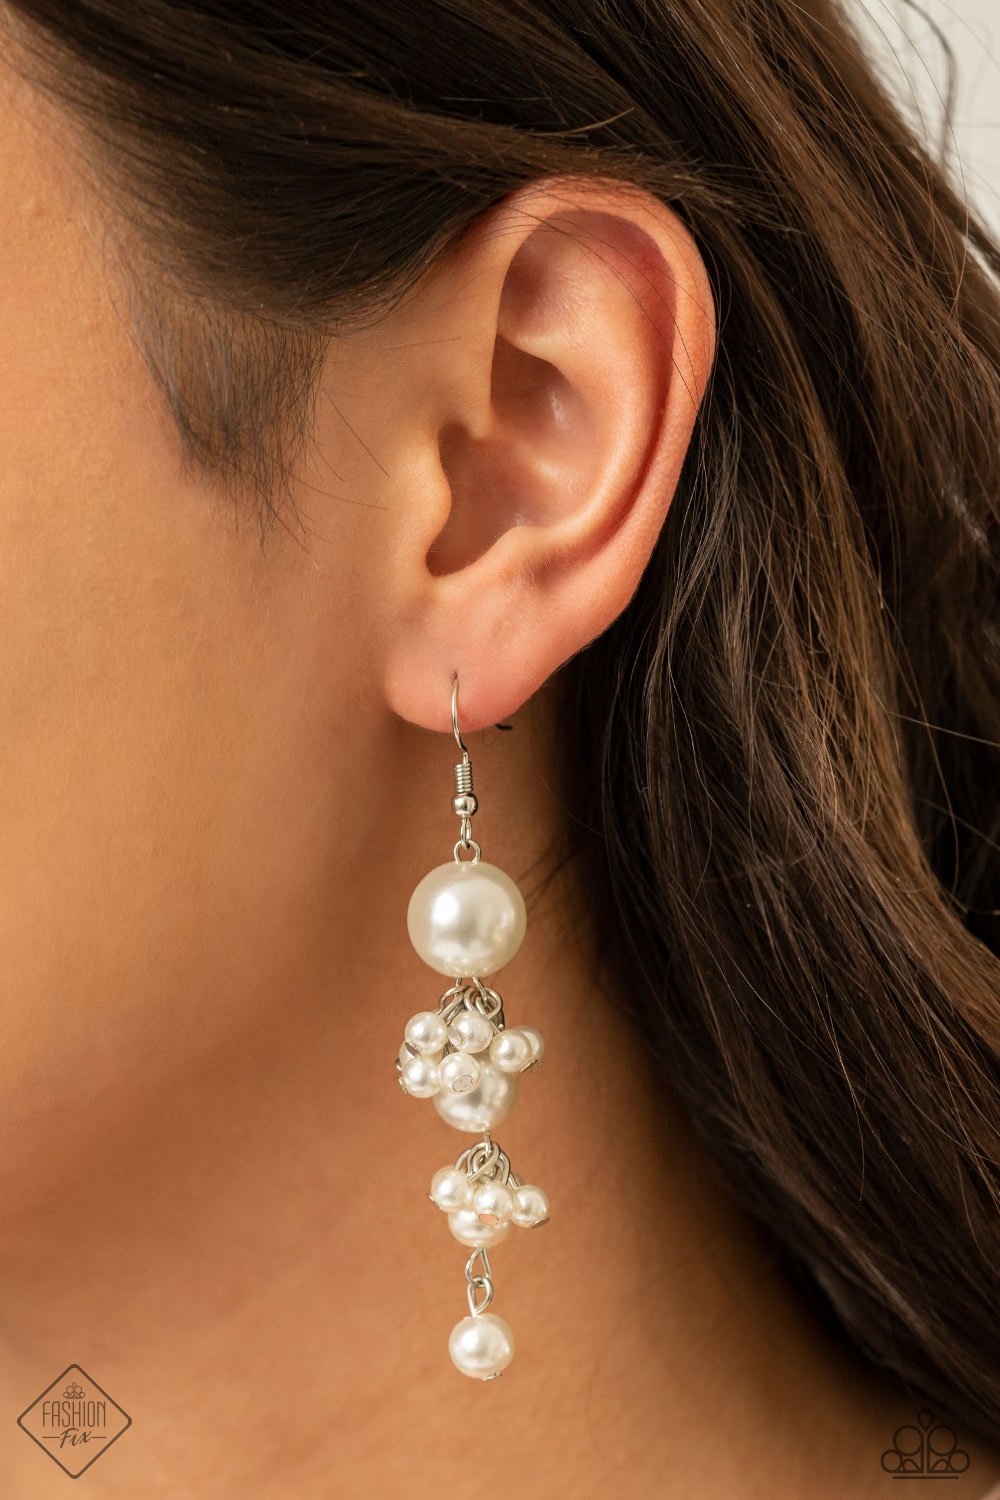 Paparazzi Ageless Applique White Fishhook Earrings - Fashion Fix Fiercely 5th Avenue March 2021